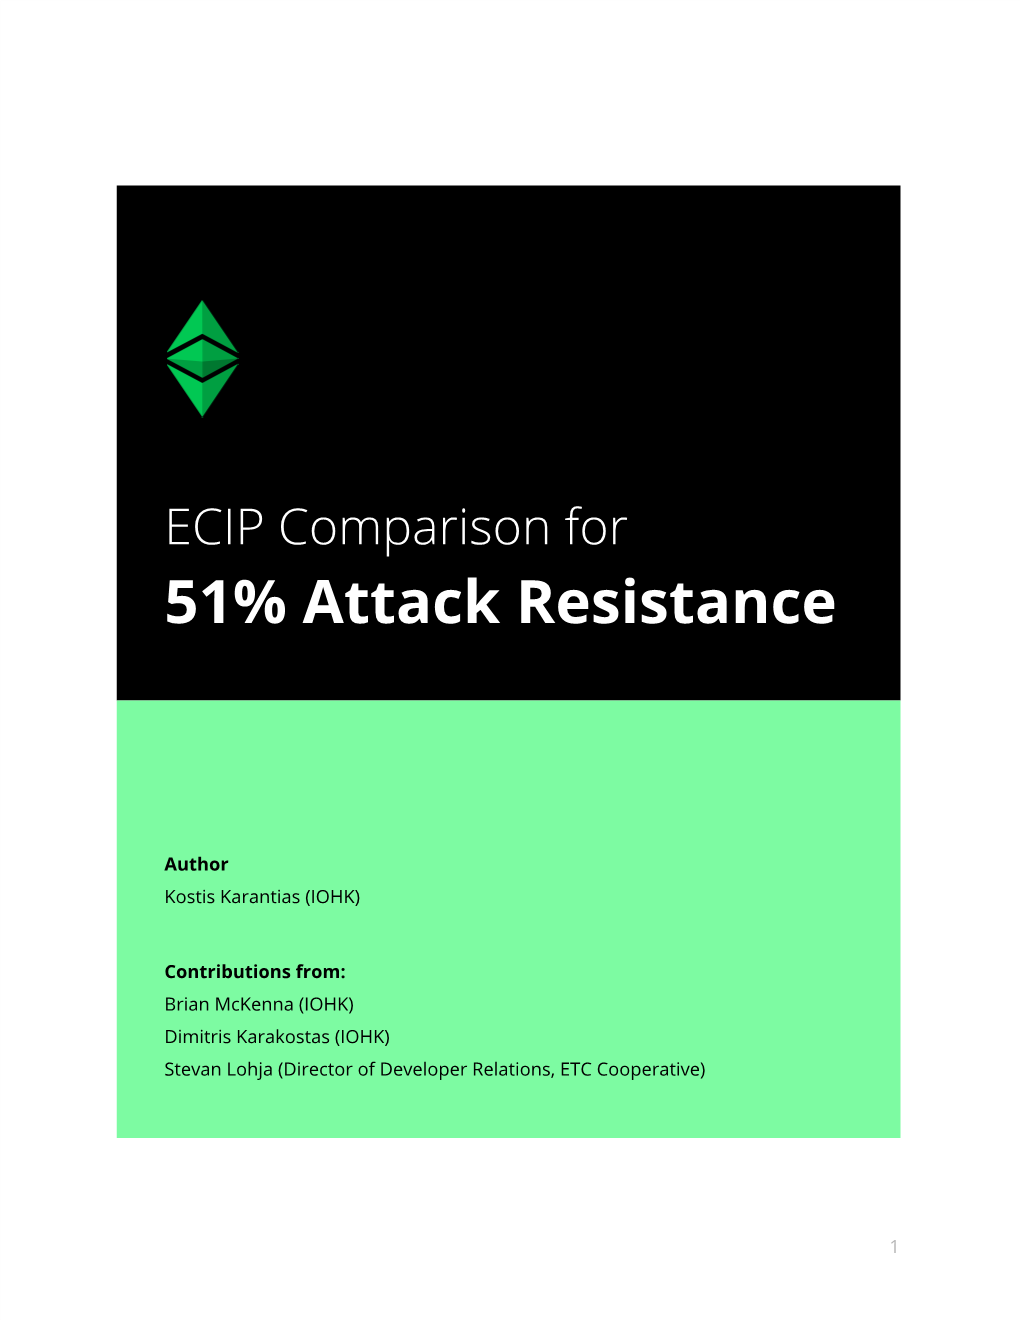 ECIP Comparison for 51% Attack Resistance